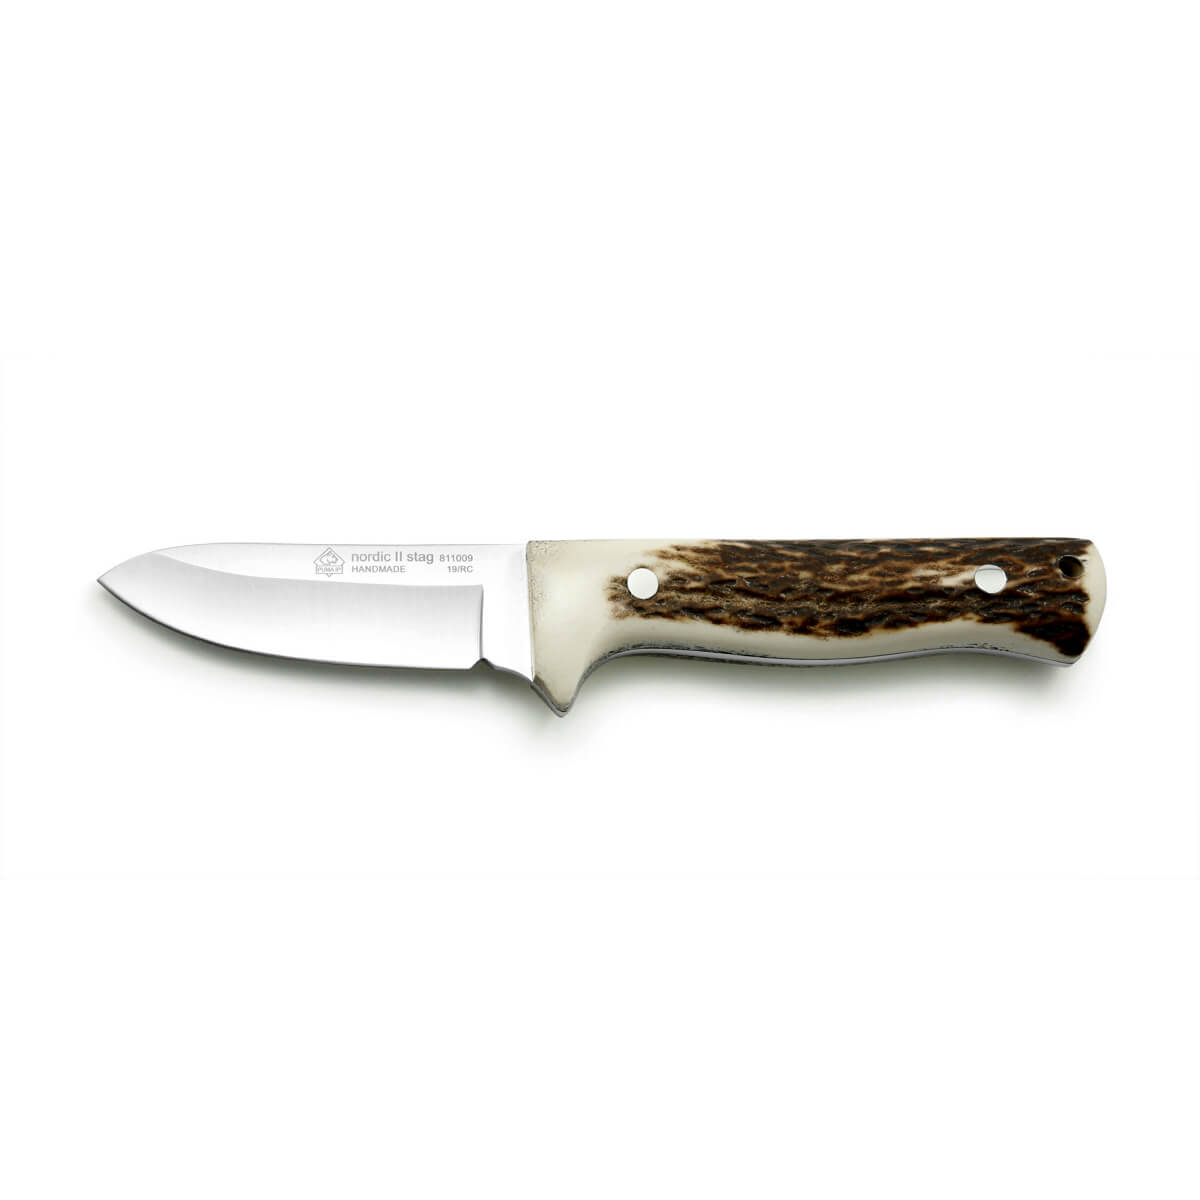 Puma Nordic Stag II handmade knife